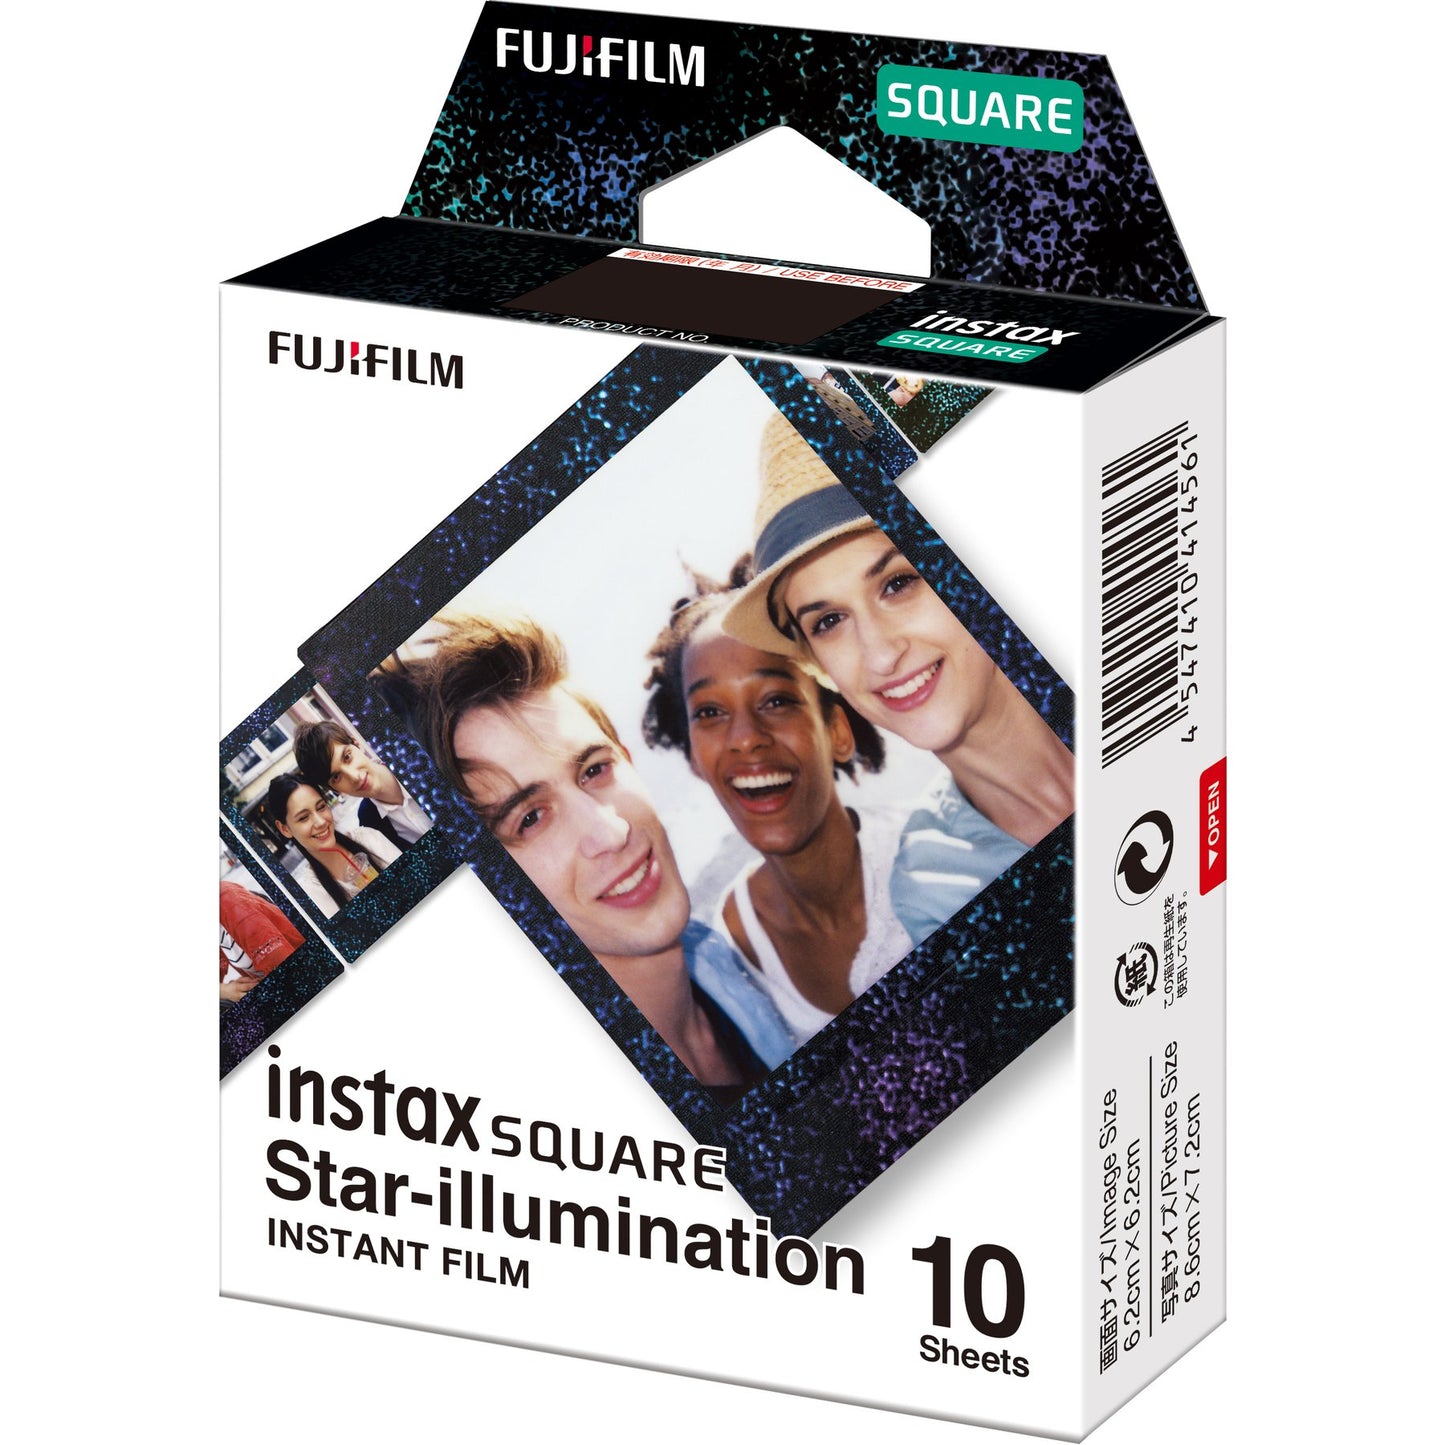 Fujifilm Black Frame Instax Square Star-Illumination Instant Film 10 Sheets Single Pack - Expiration July 2021